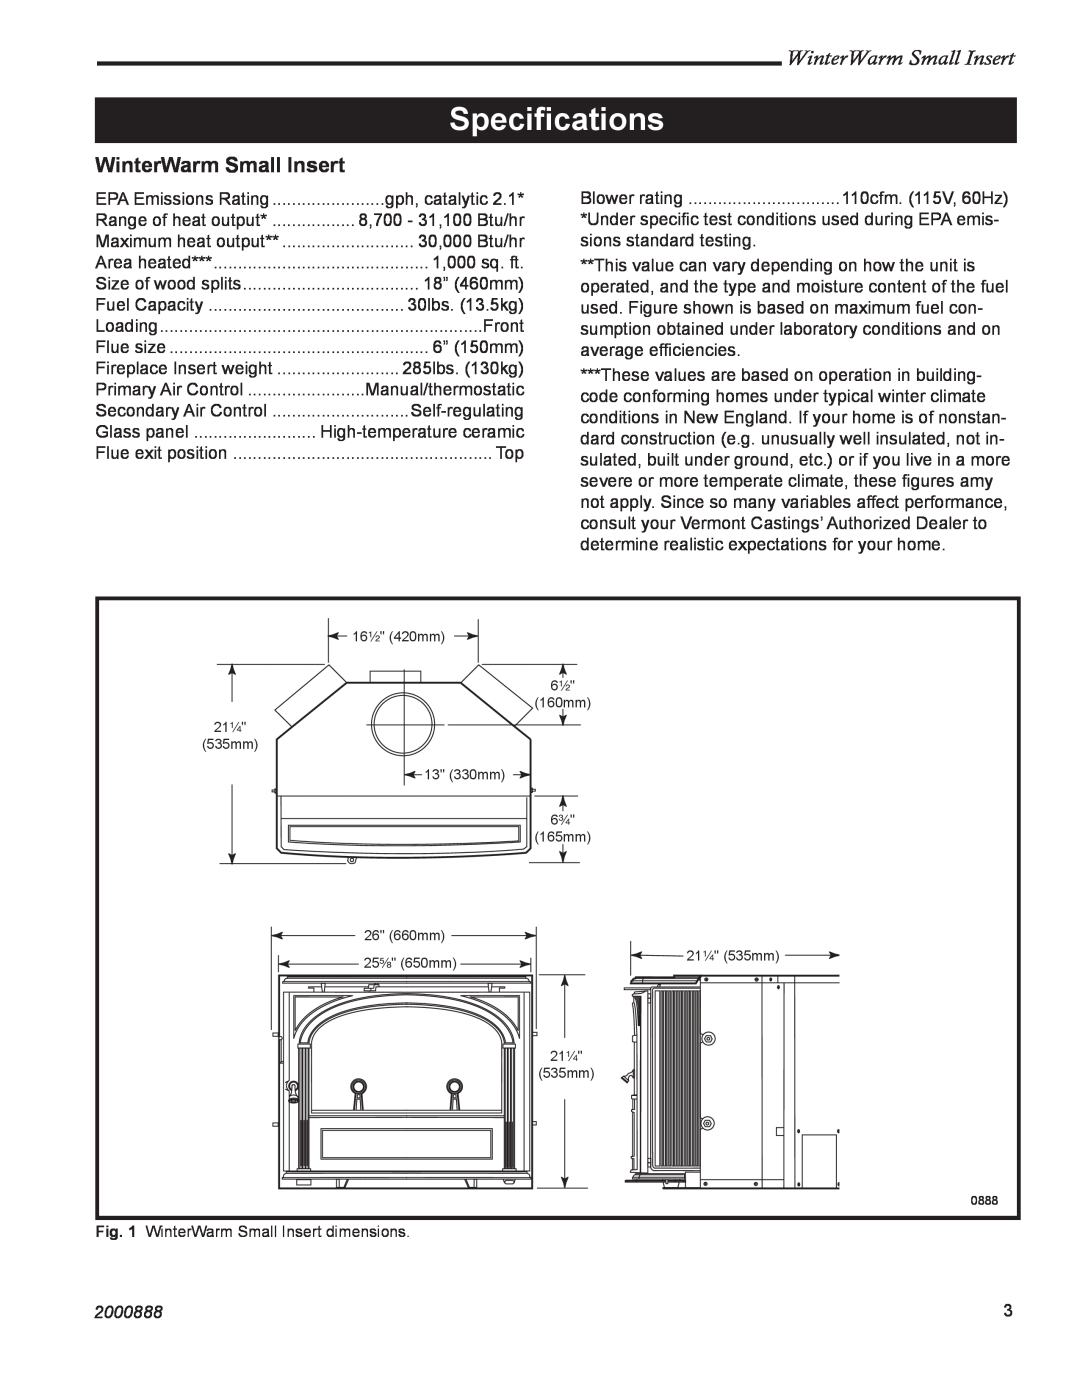 CFM Corporation Winter Warm - Small Insert installation instructions Speciﬁcations, WinterWarm Small Insert, 2000888 